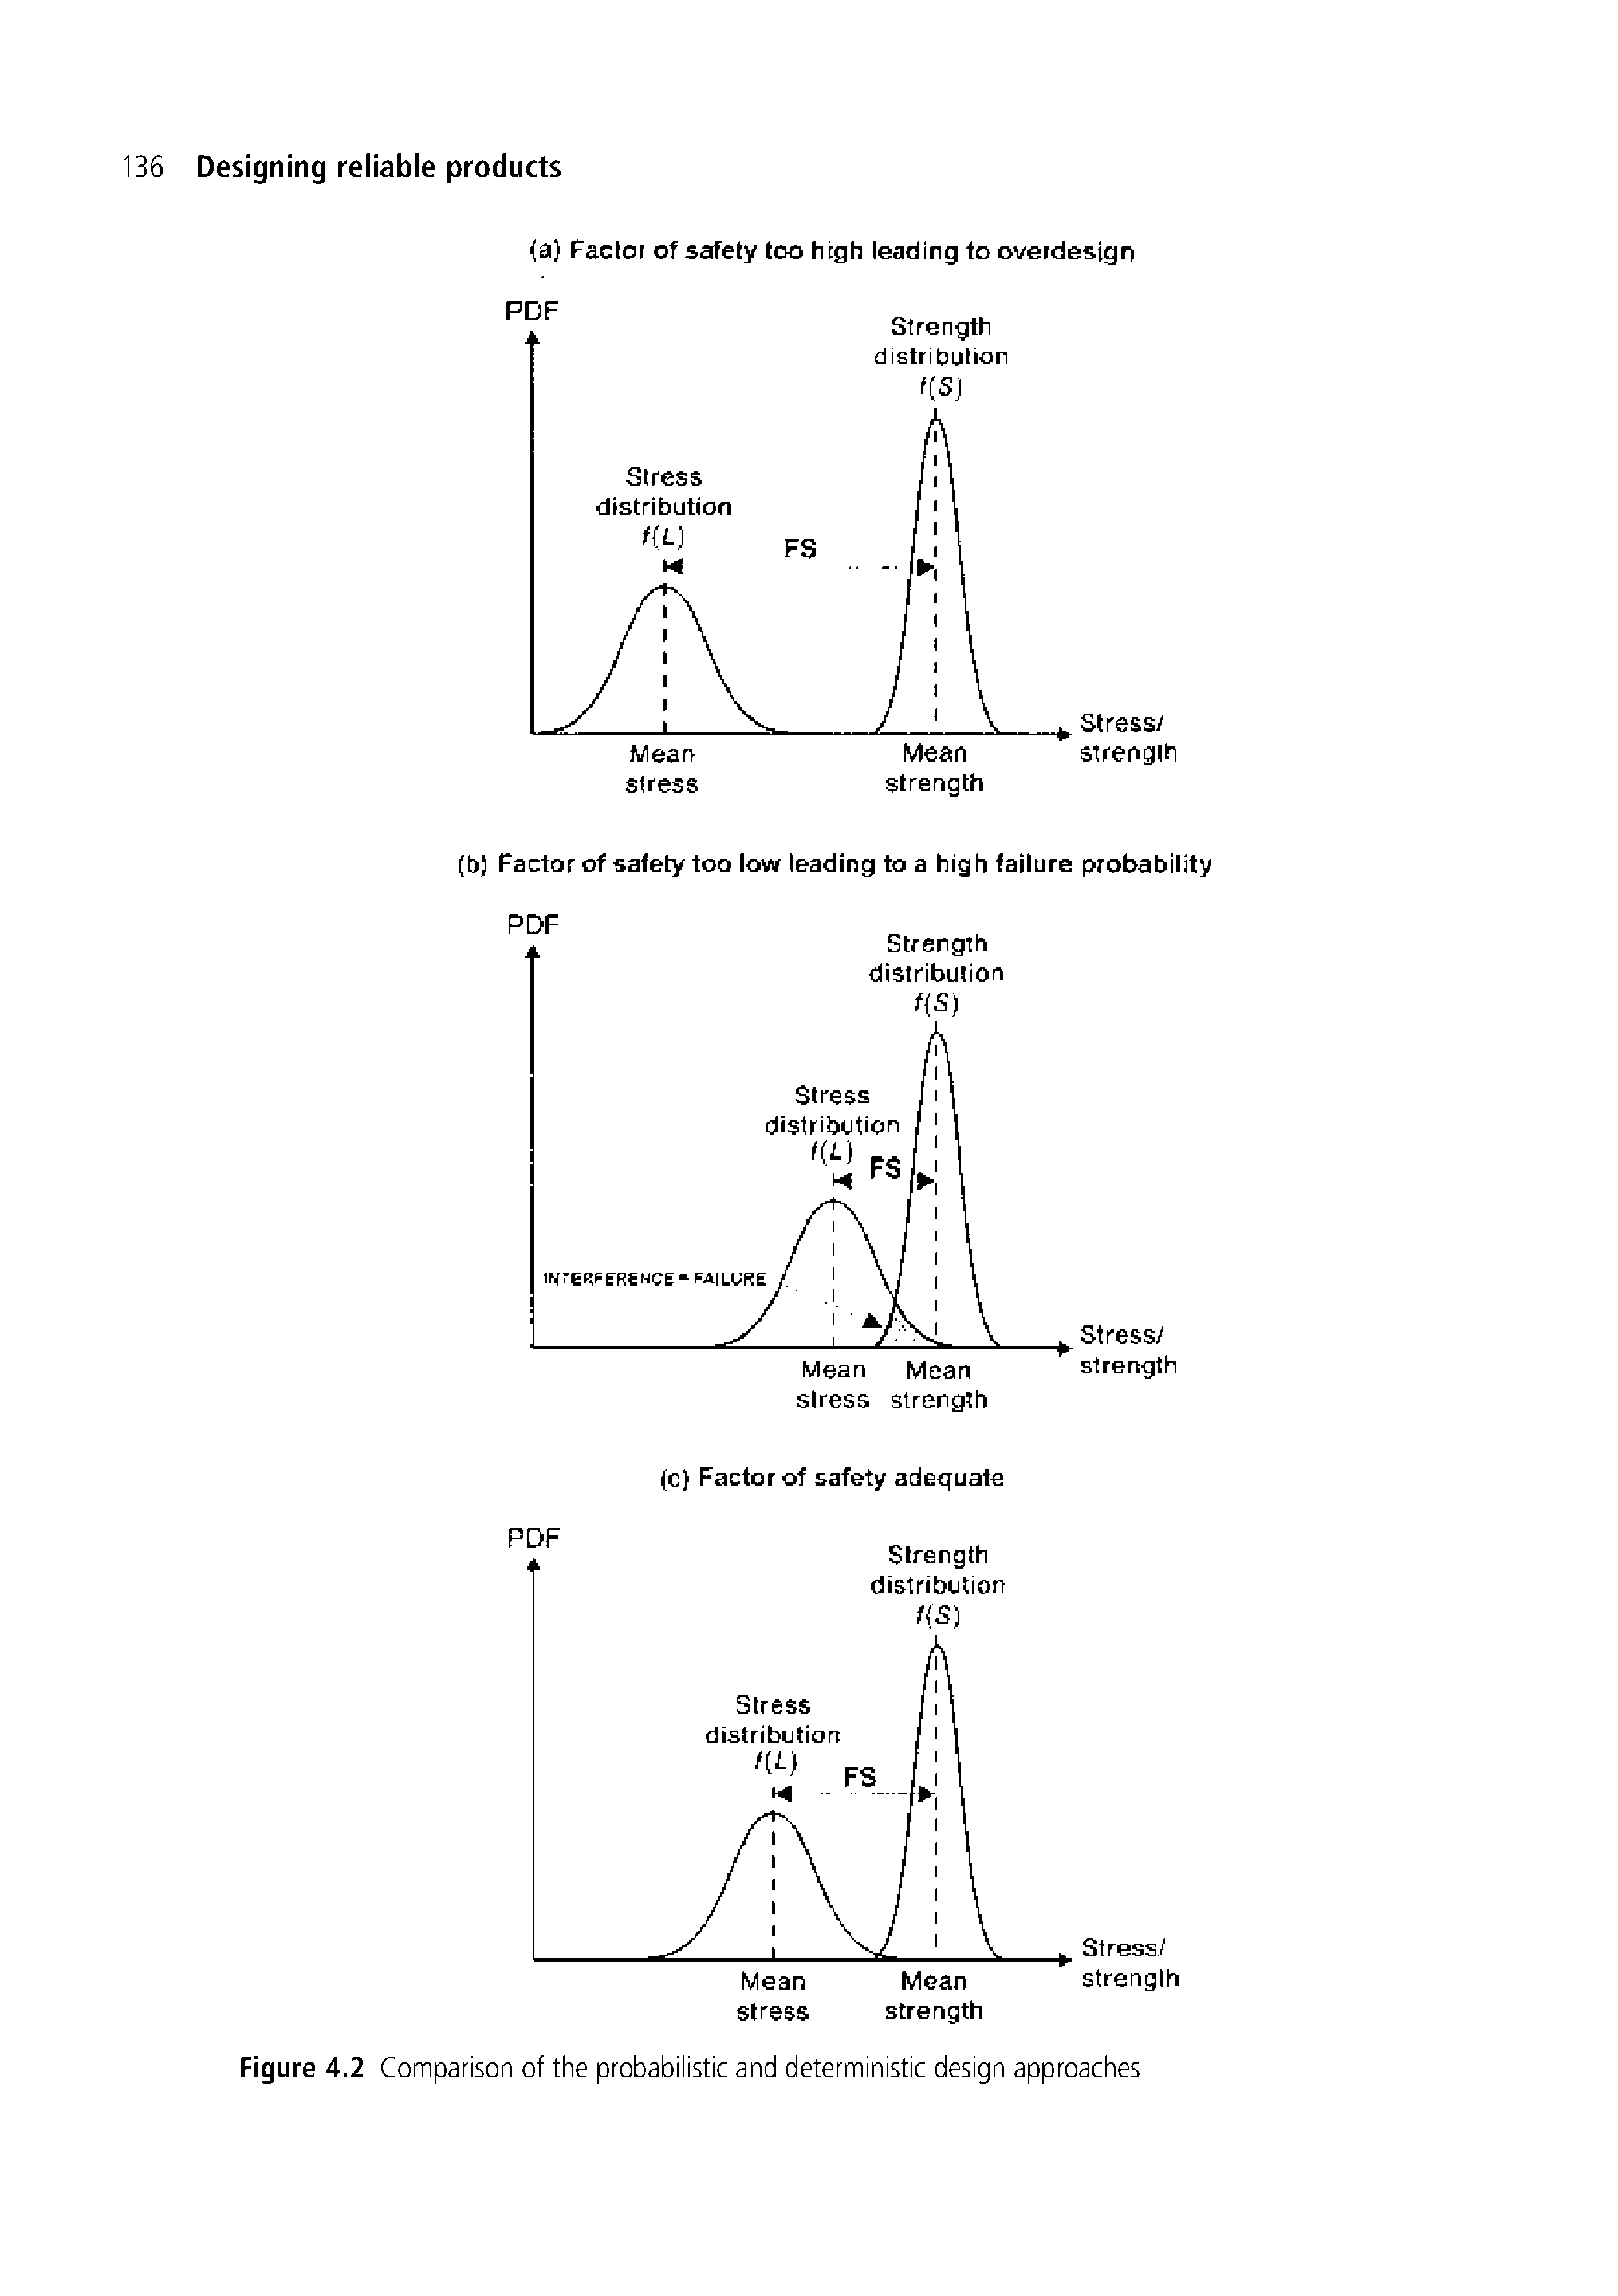 Figure 4.2 Comparison of the probabilistic and deterministic design approaches...